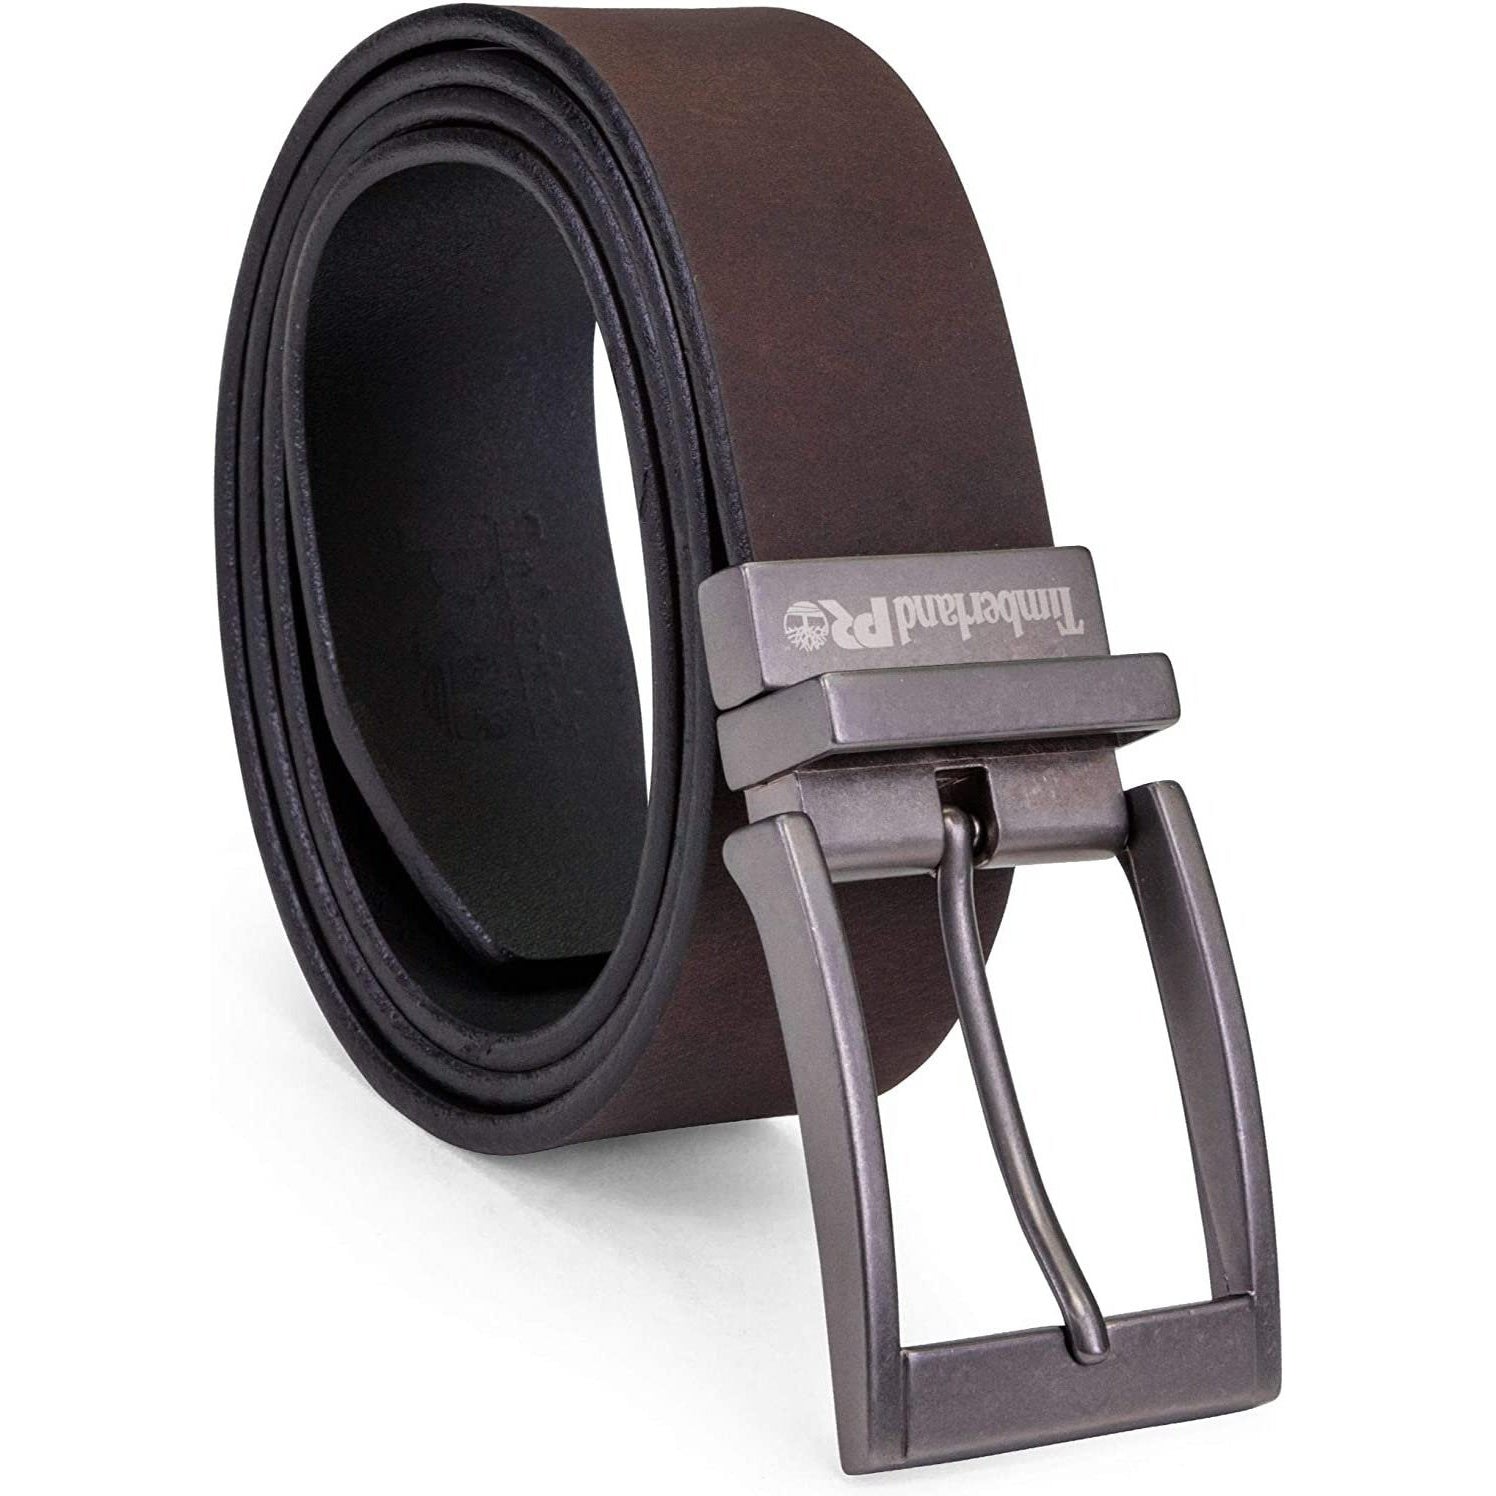 Timberland Pro Men's Classic Harness Reversible Leather Work Belt - Brown - BP0005 34 / Brown - Overlook Boots